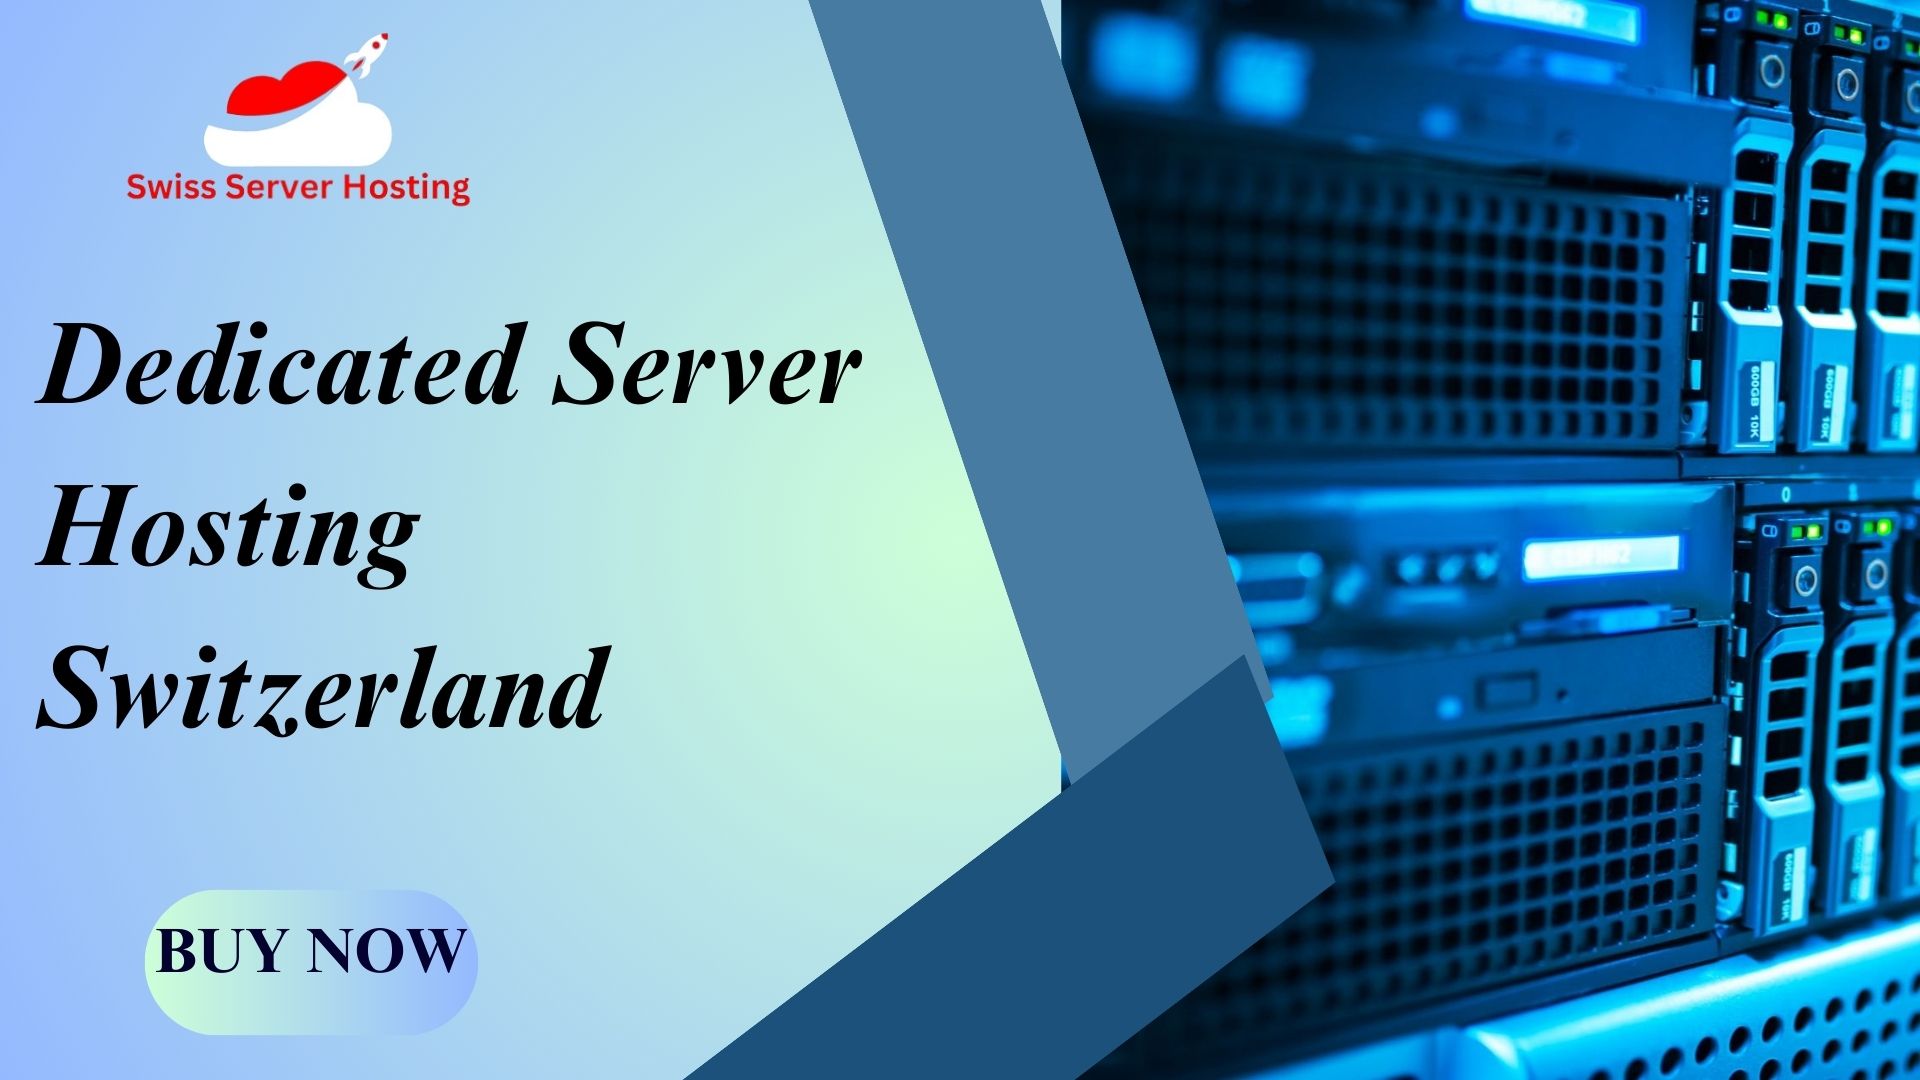 Dedicated Server Hosting Switzerland